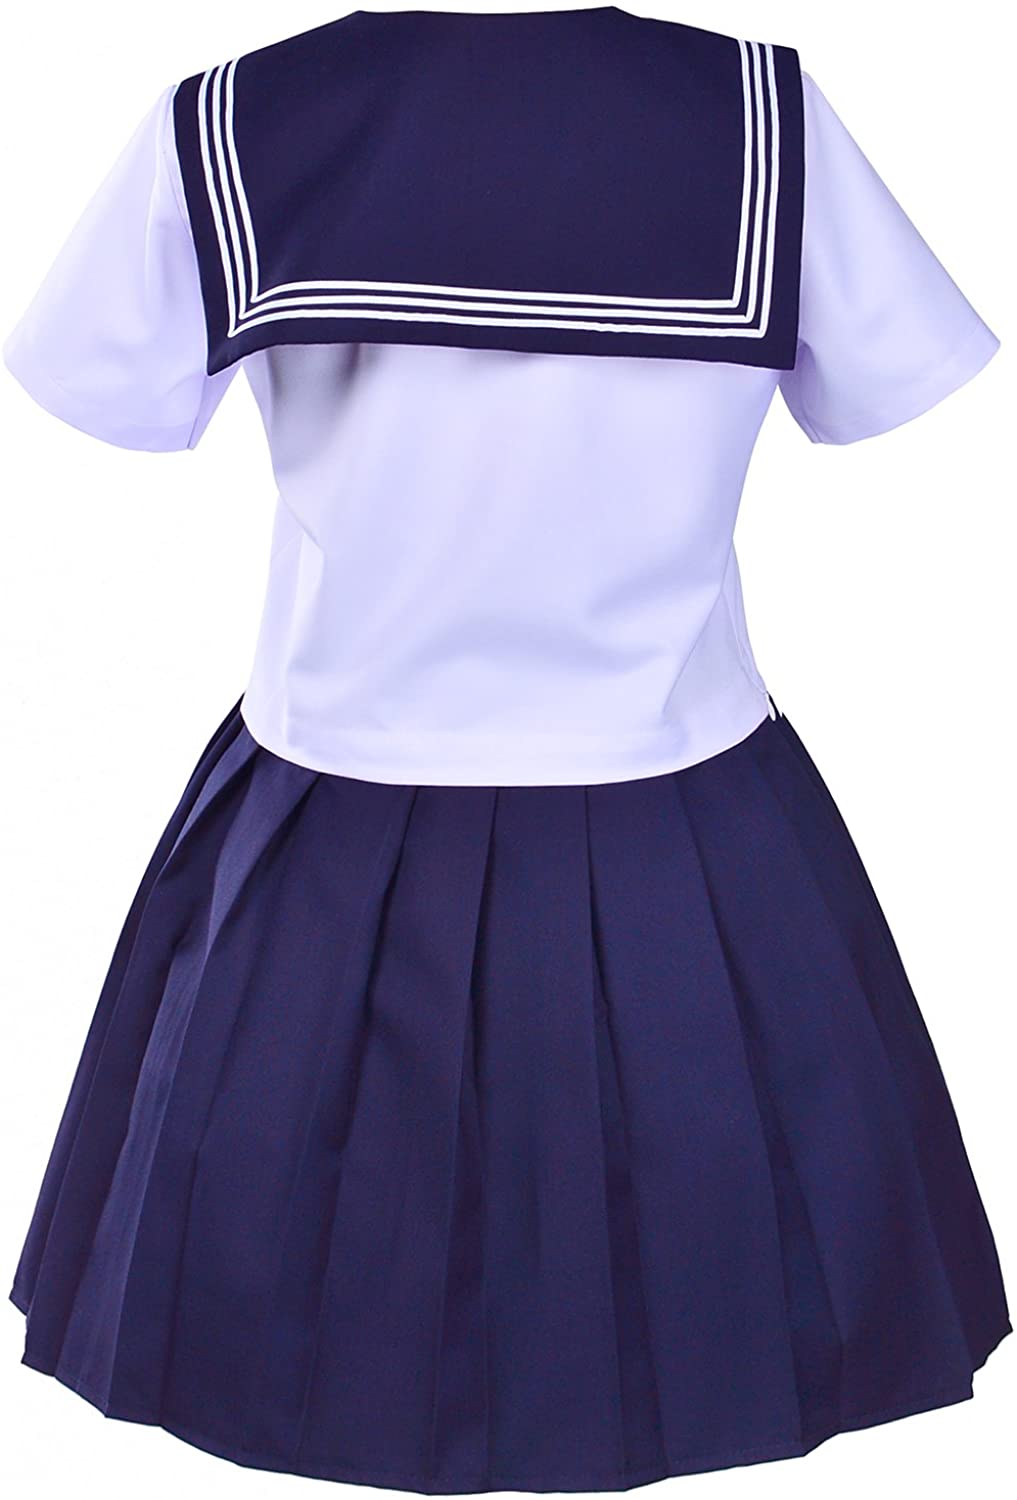 Japanese School Girls Uniform Sailor Navy Blue 3